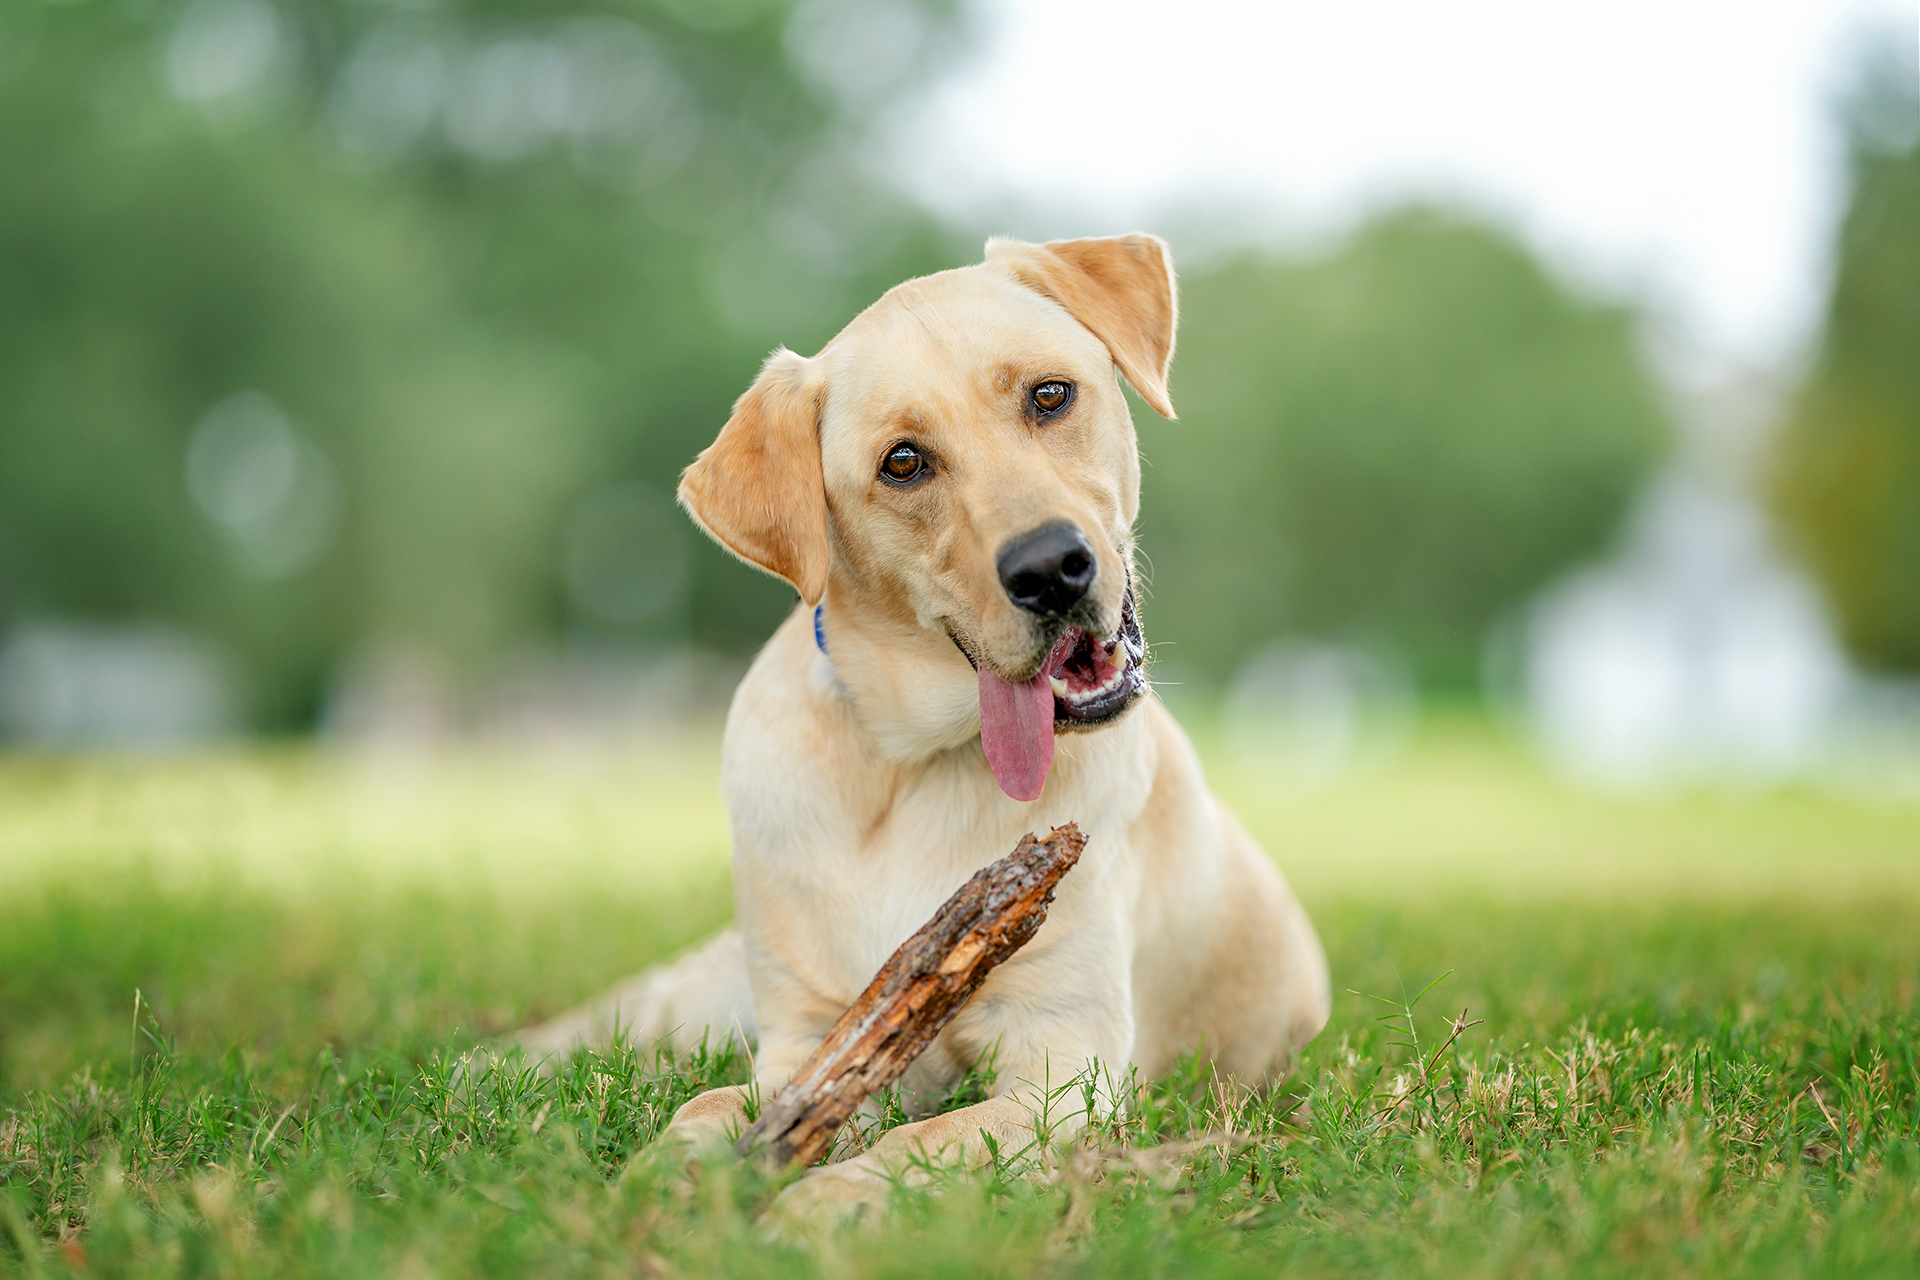 Luke, a yellow labrador retriever, chews on a stick